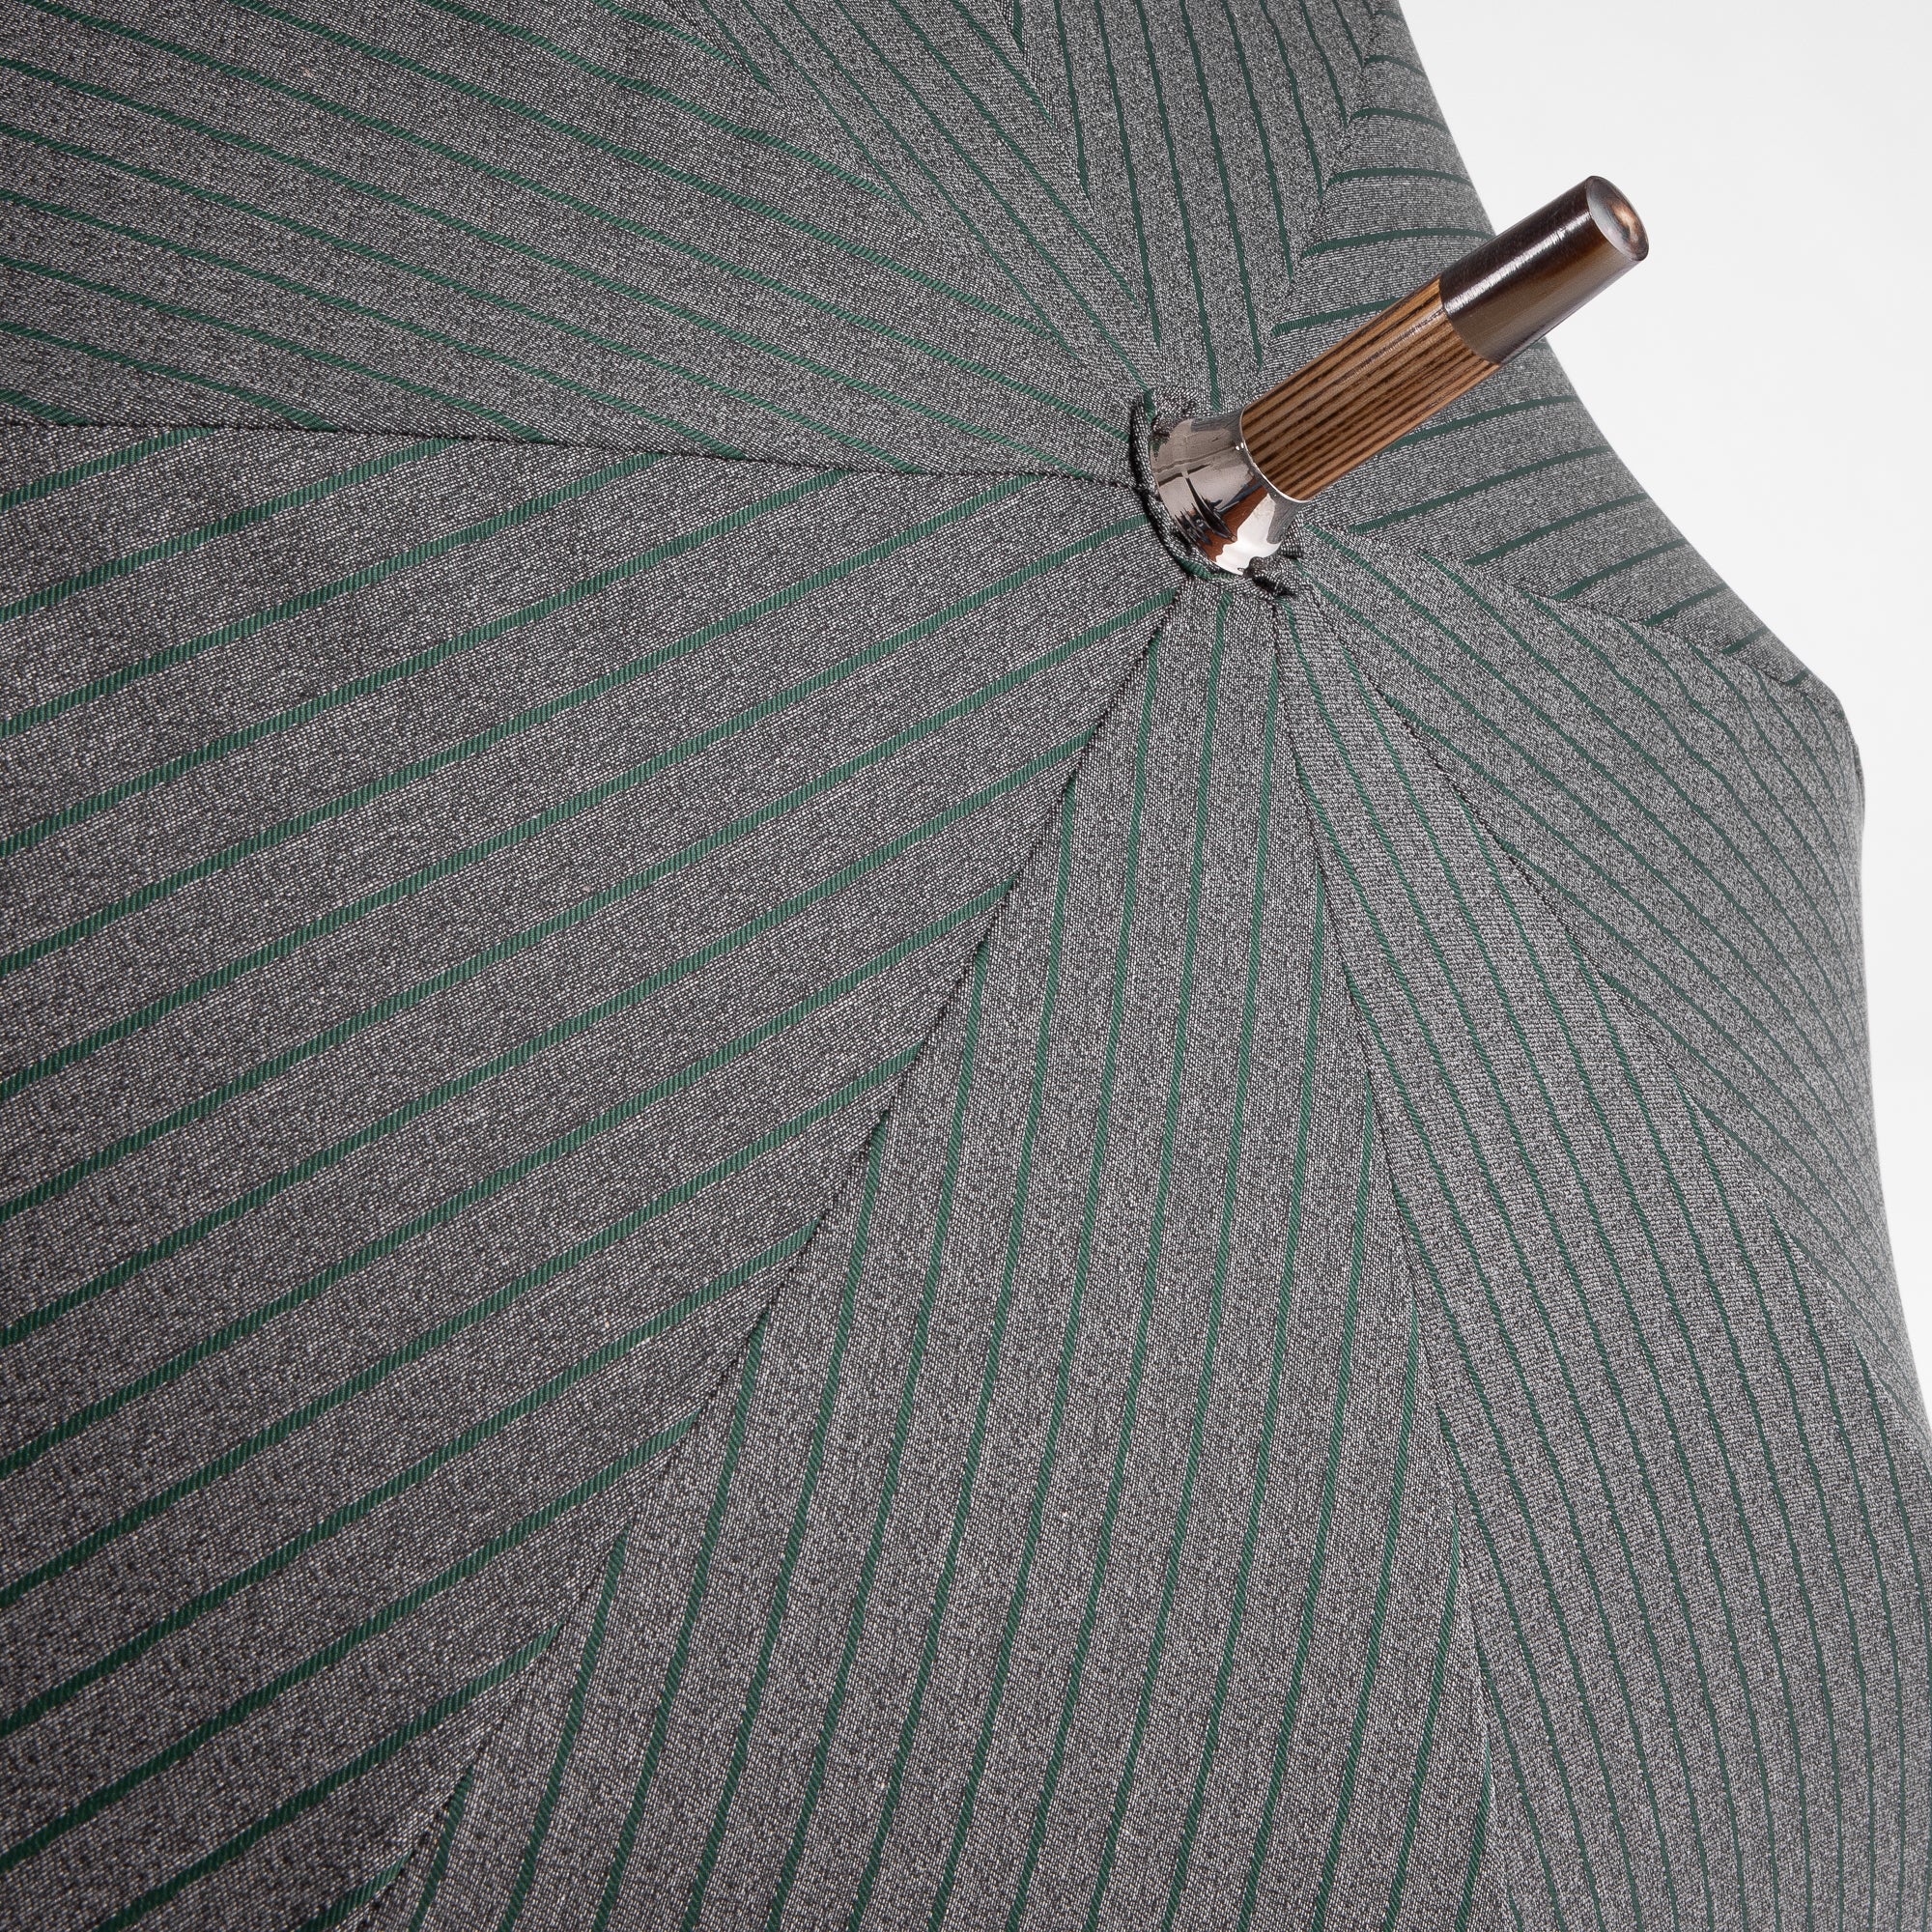 Hicory Wood Umbrella